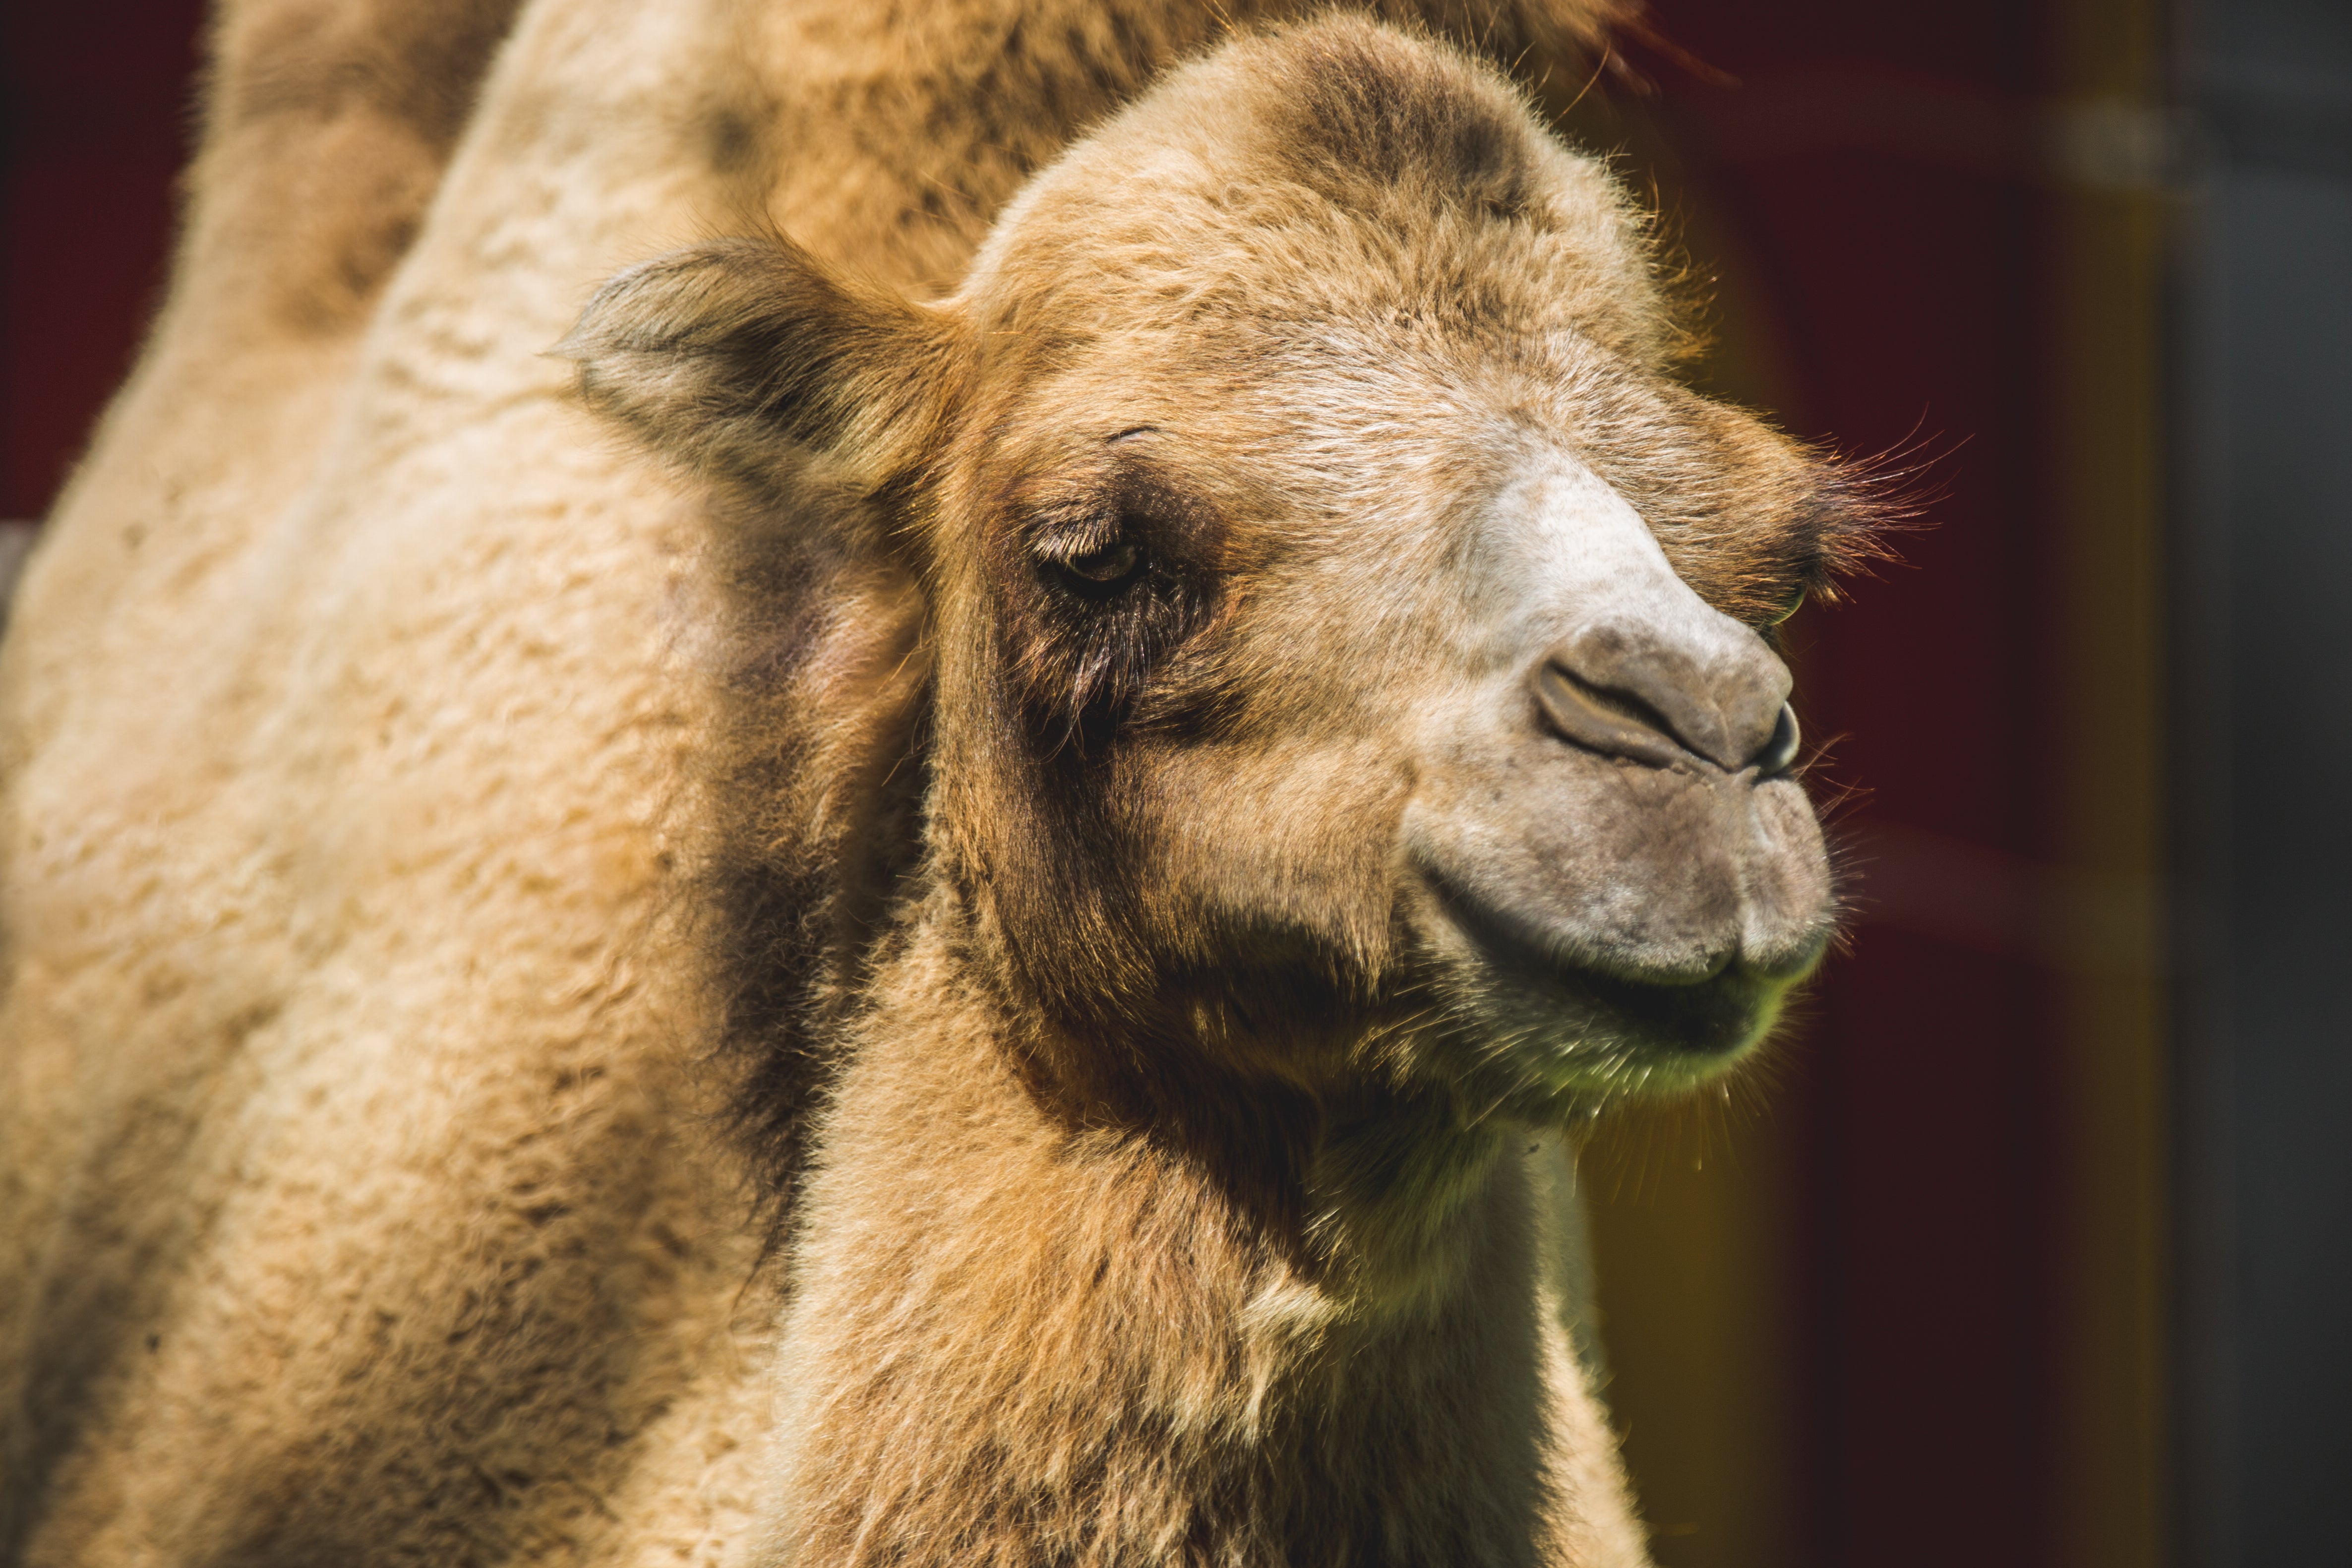 camels face